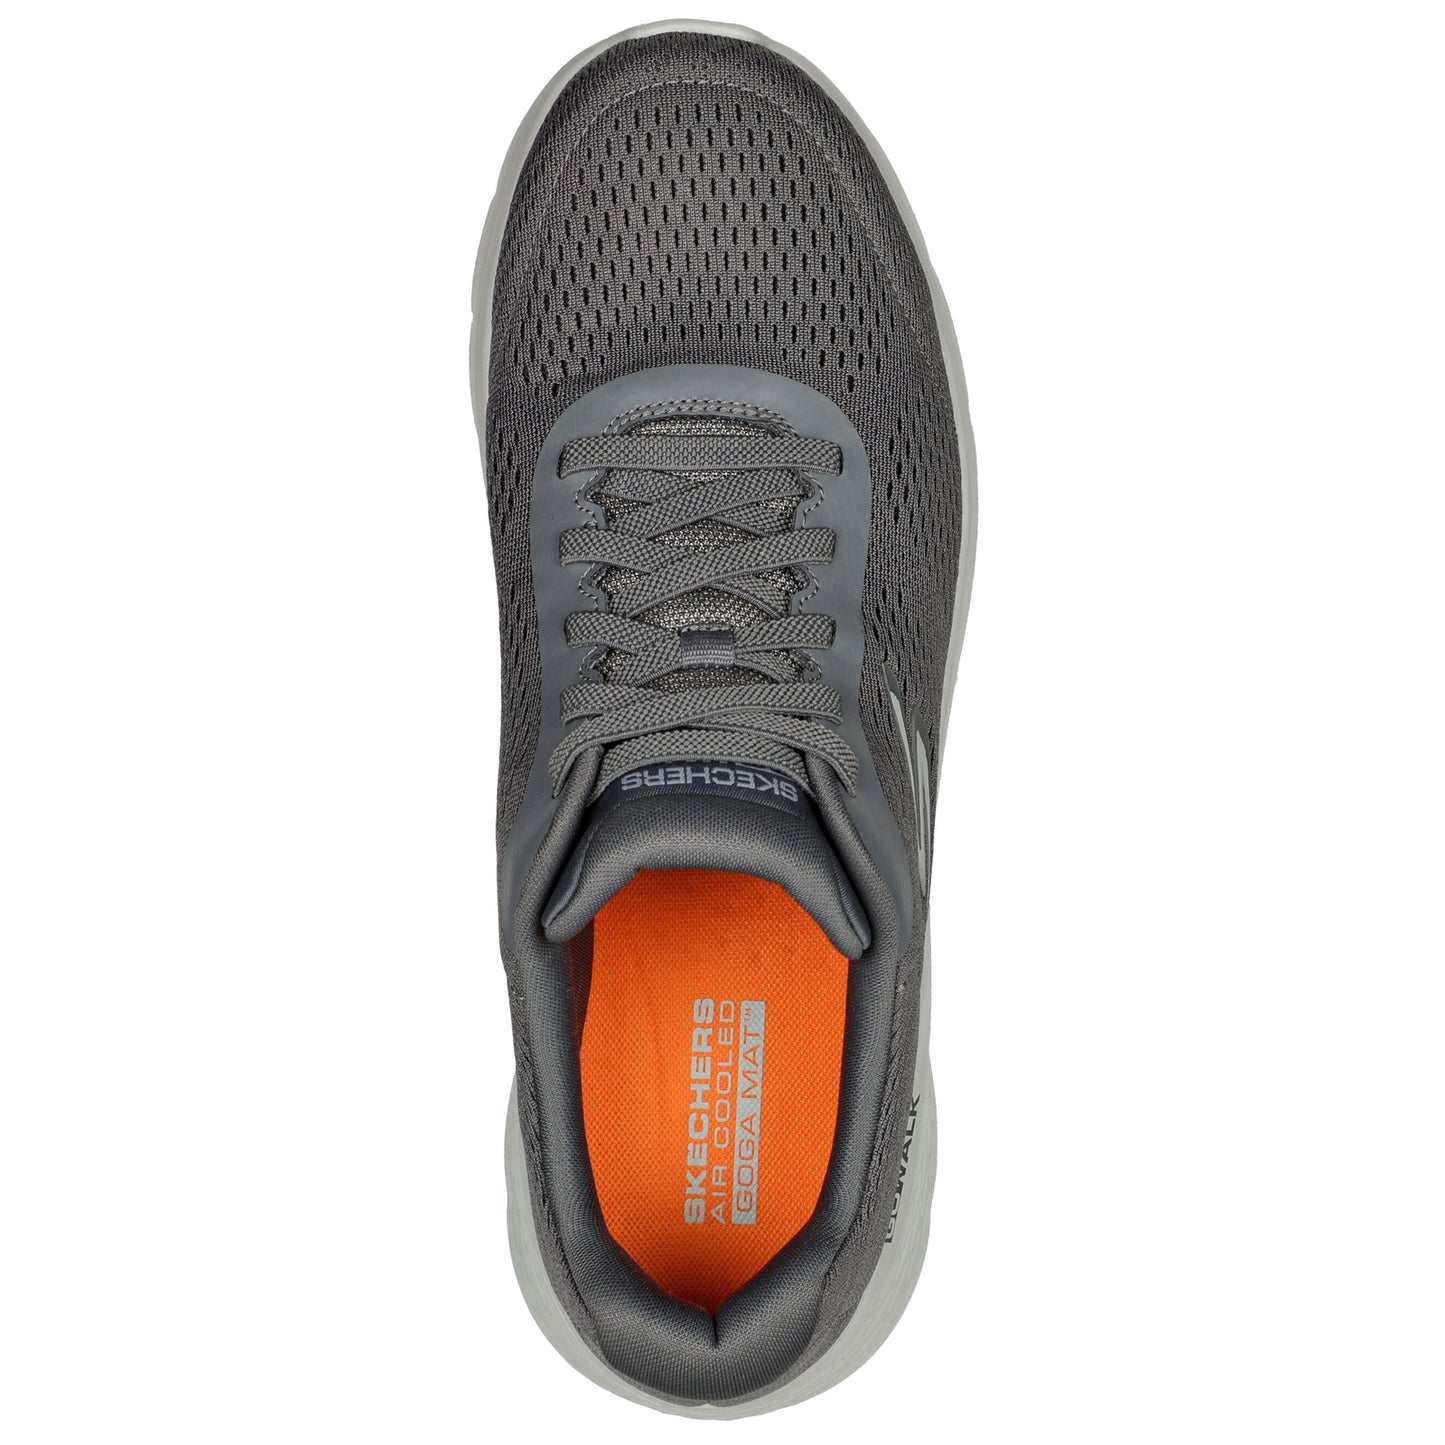 Skechers Mens Go Walk Flex Remark Grey Charcoal Trainers Shoes